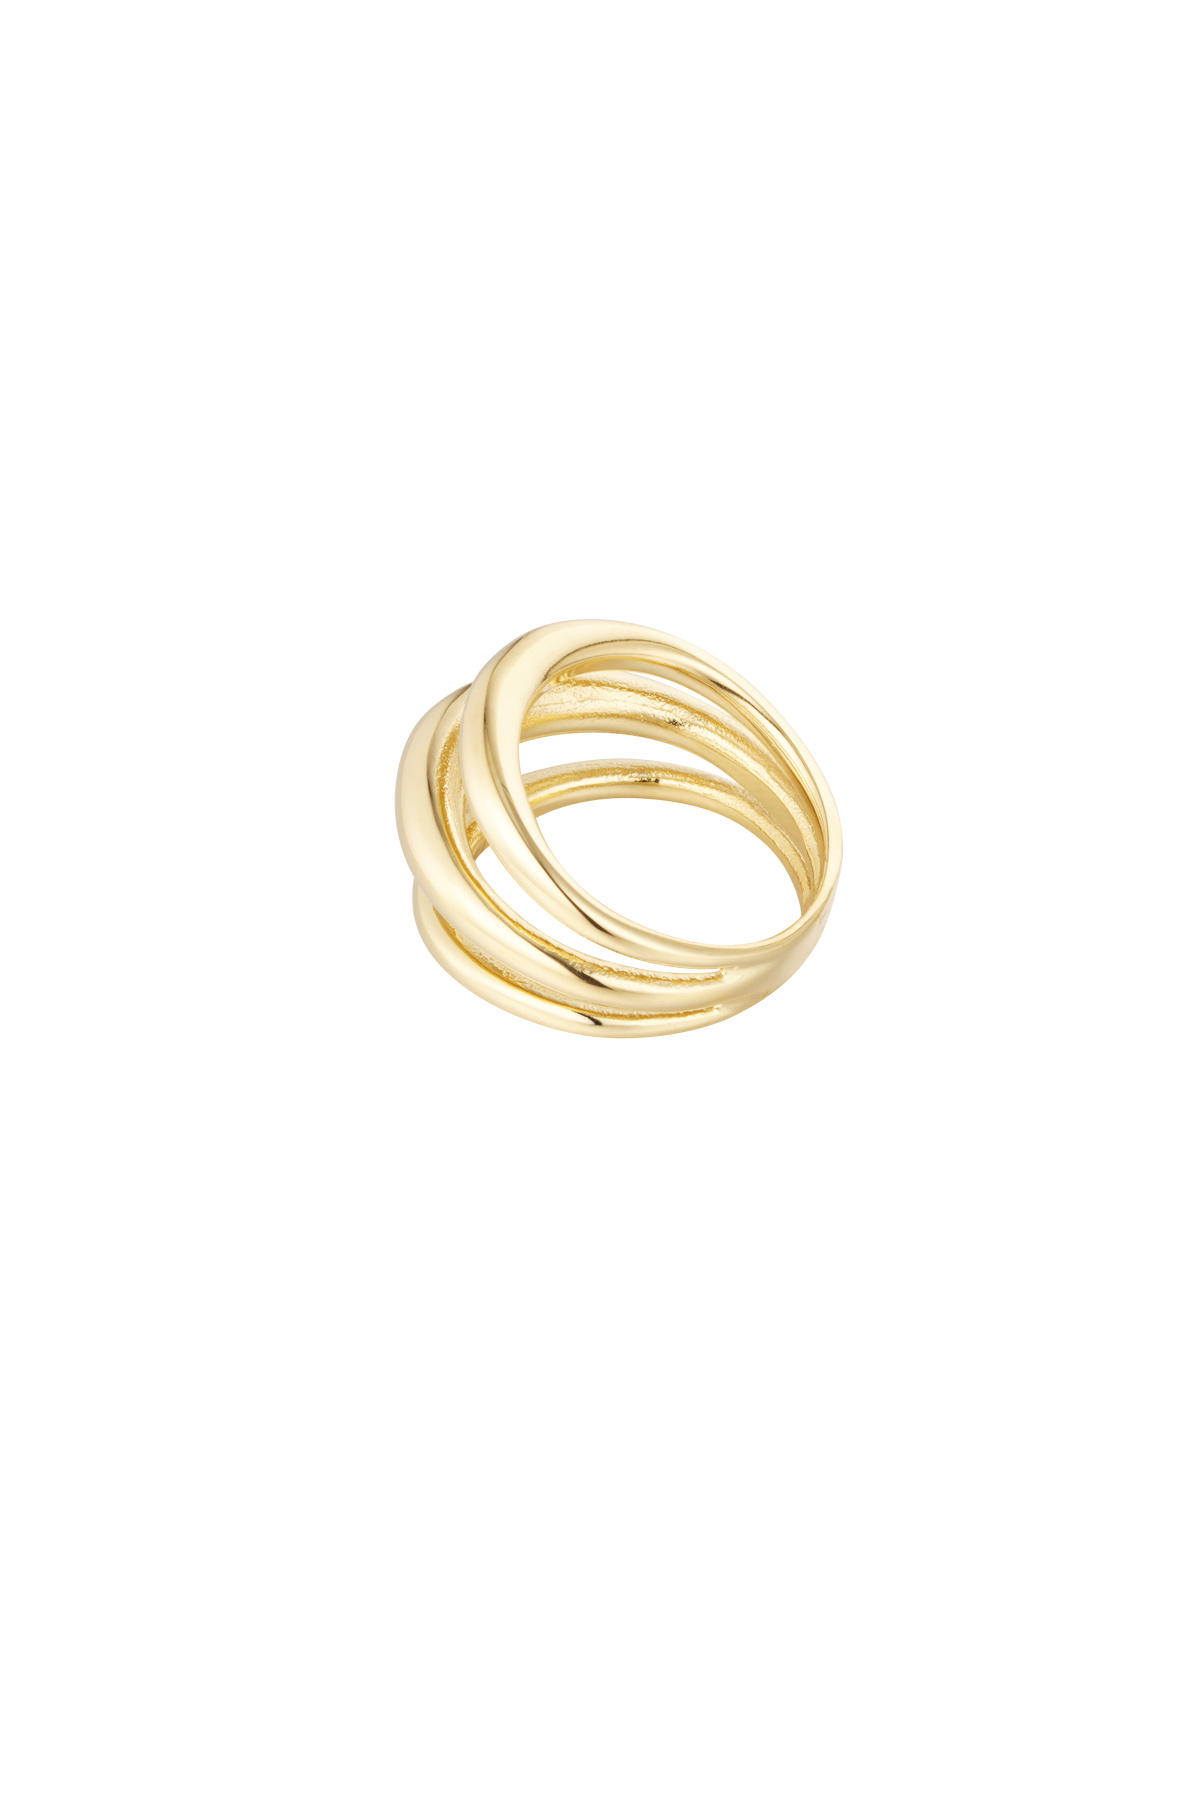 Ring drie lagen - goud Afbeelding3